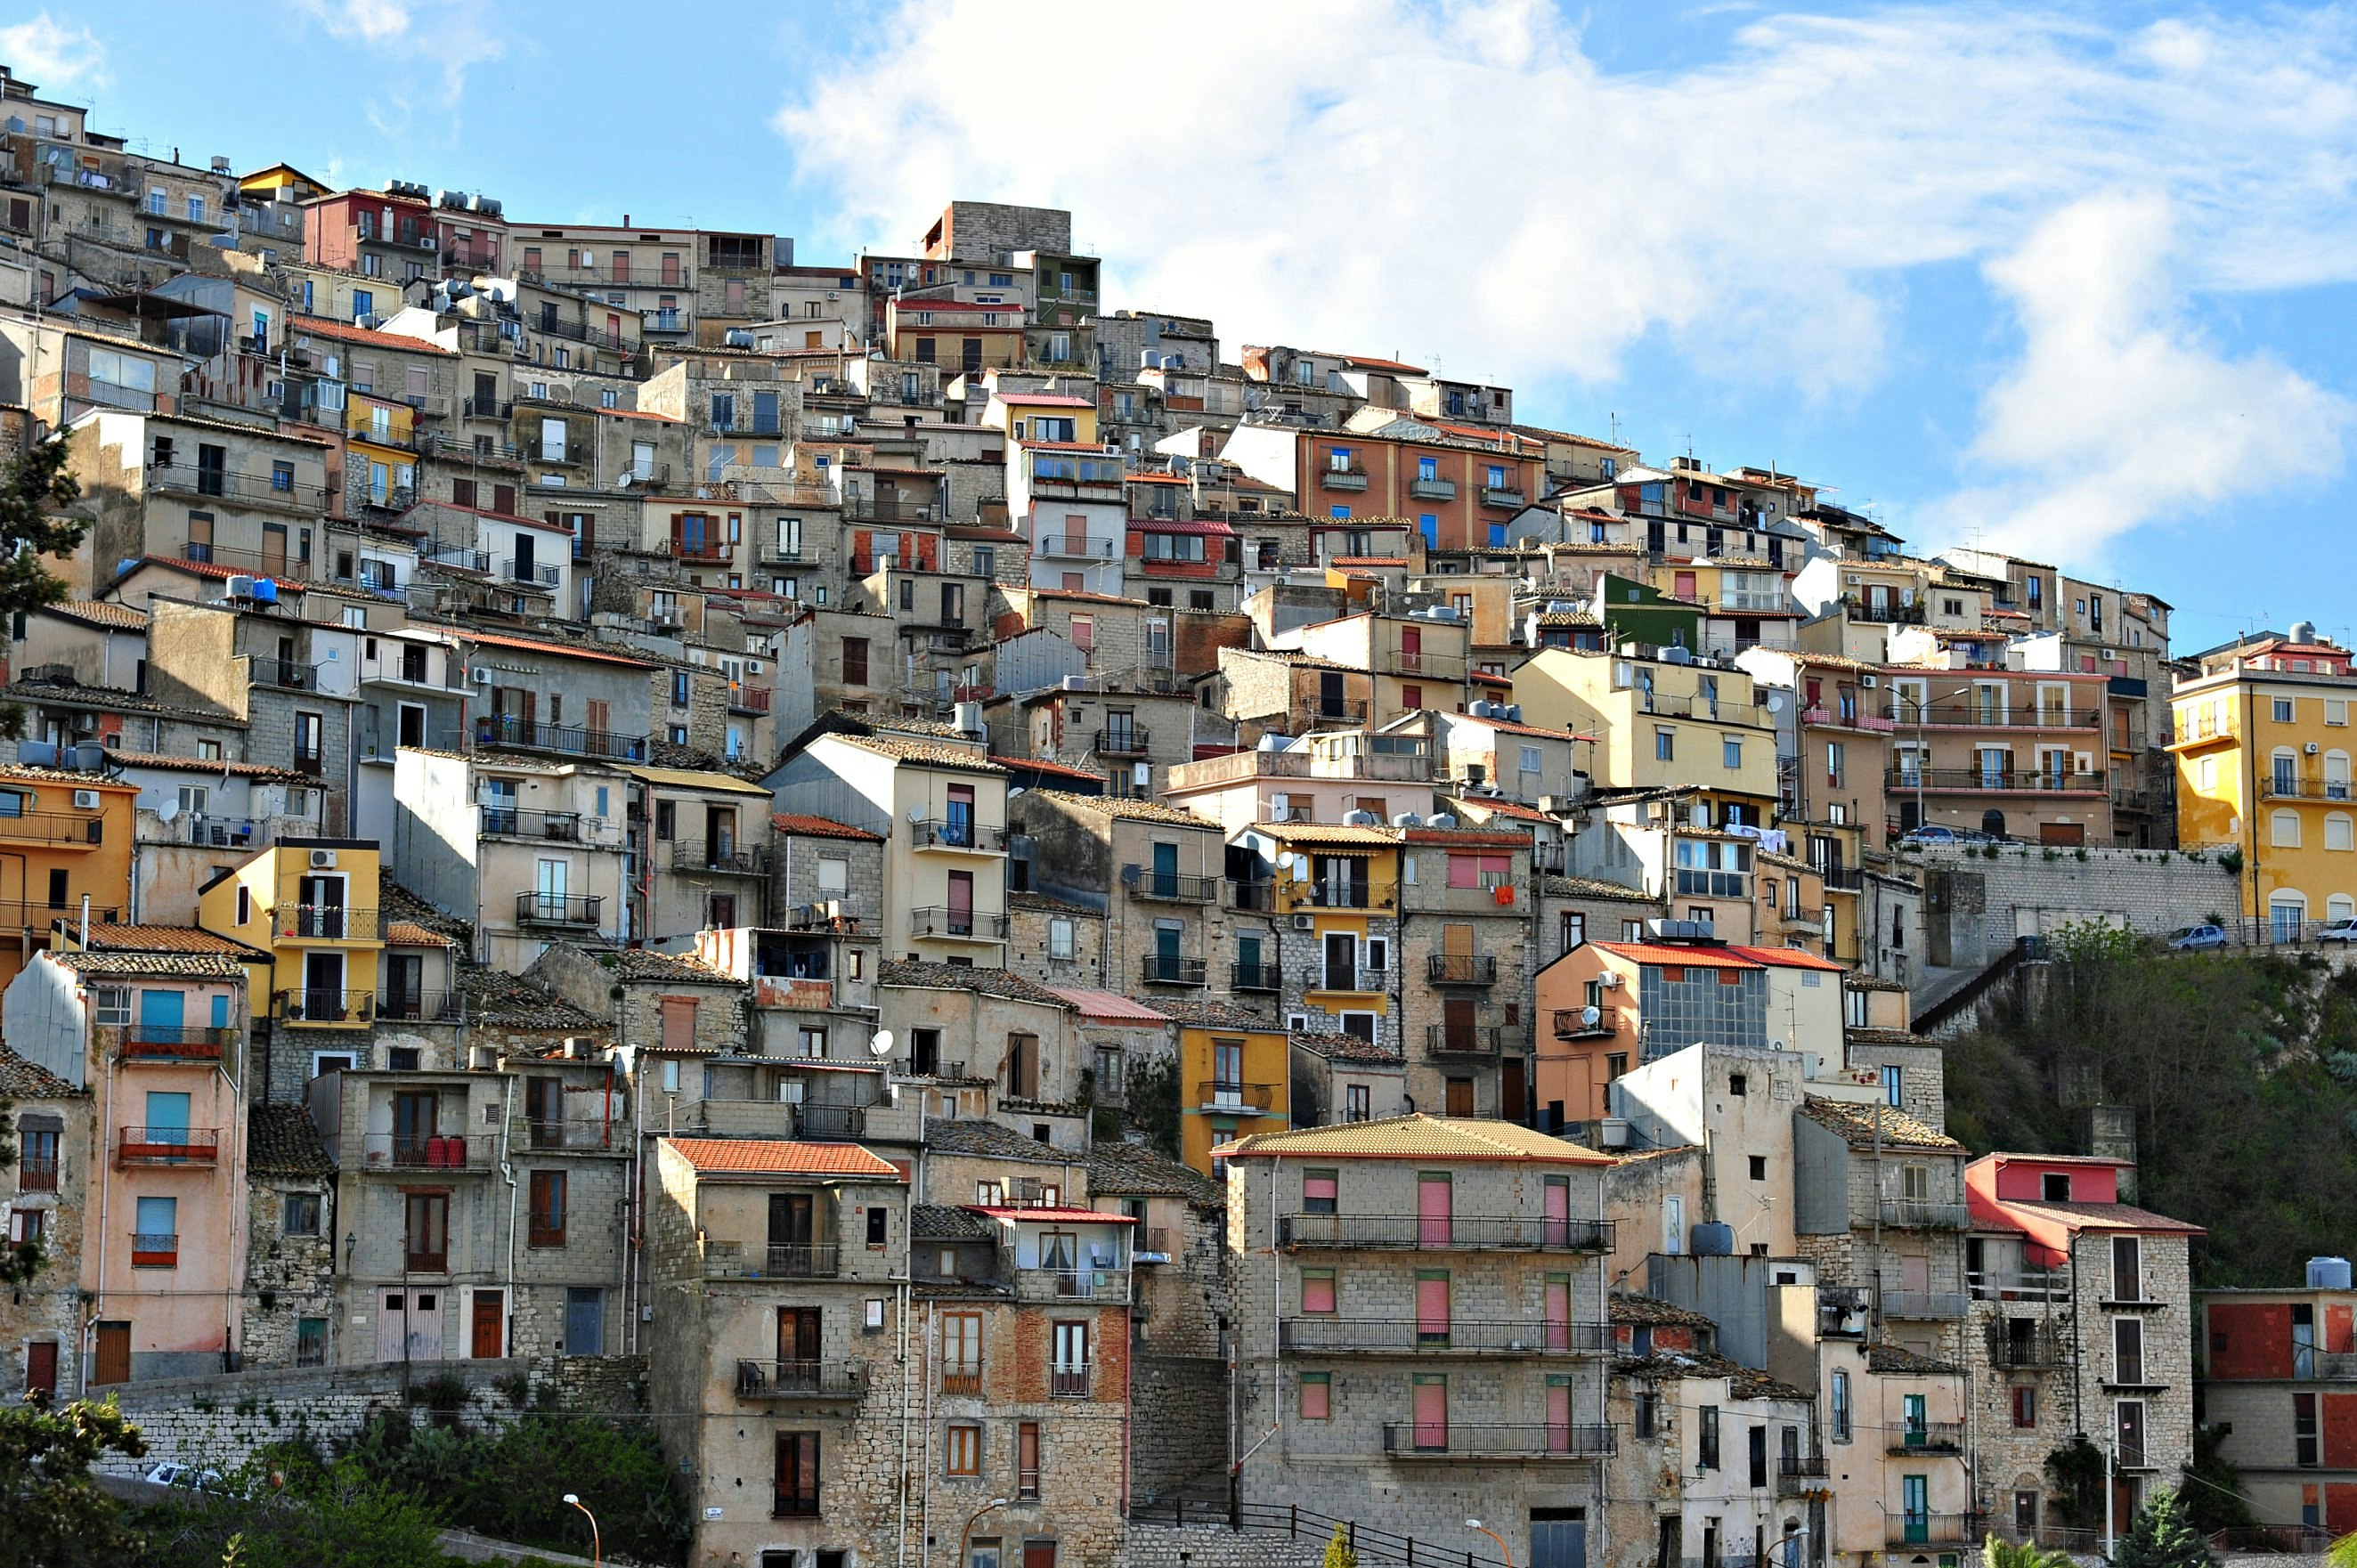 Multi-storey hilltop properties in Sicily